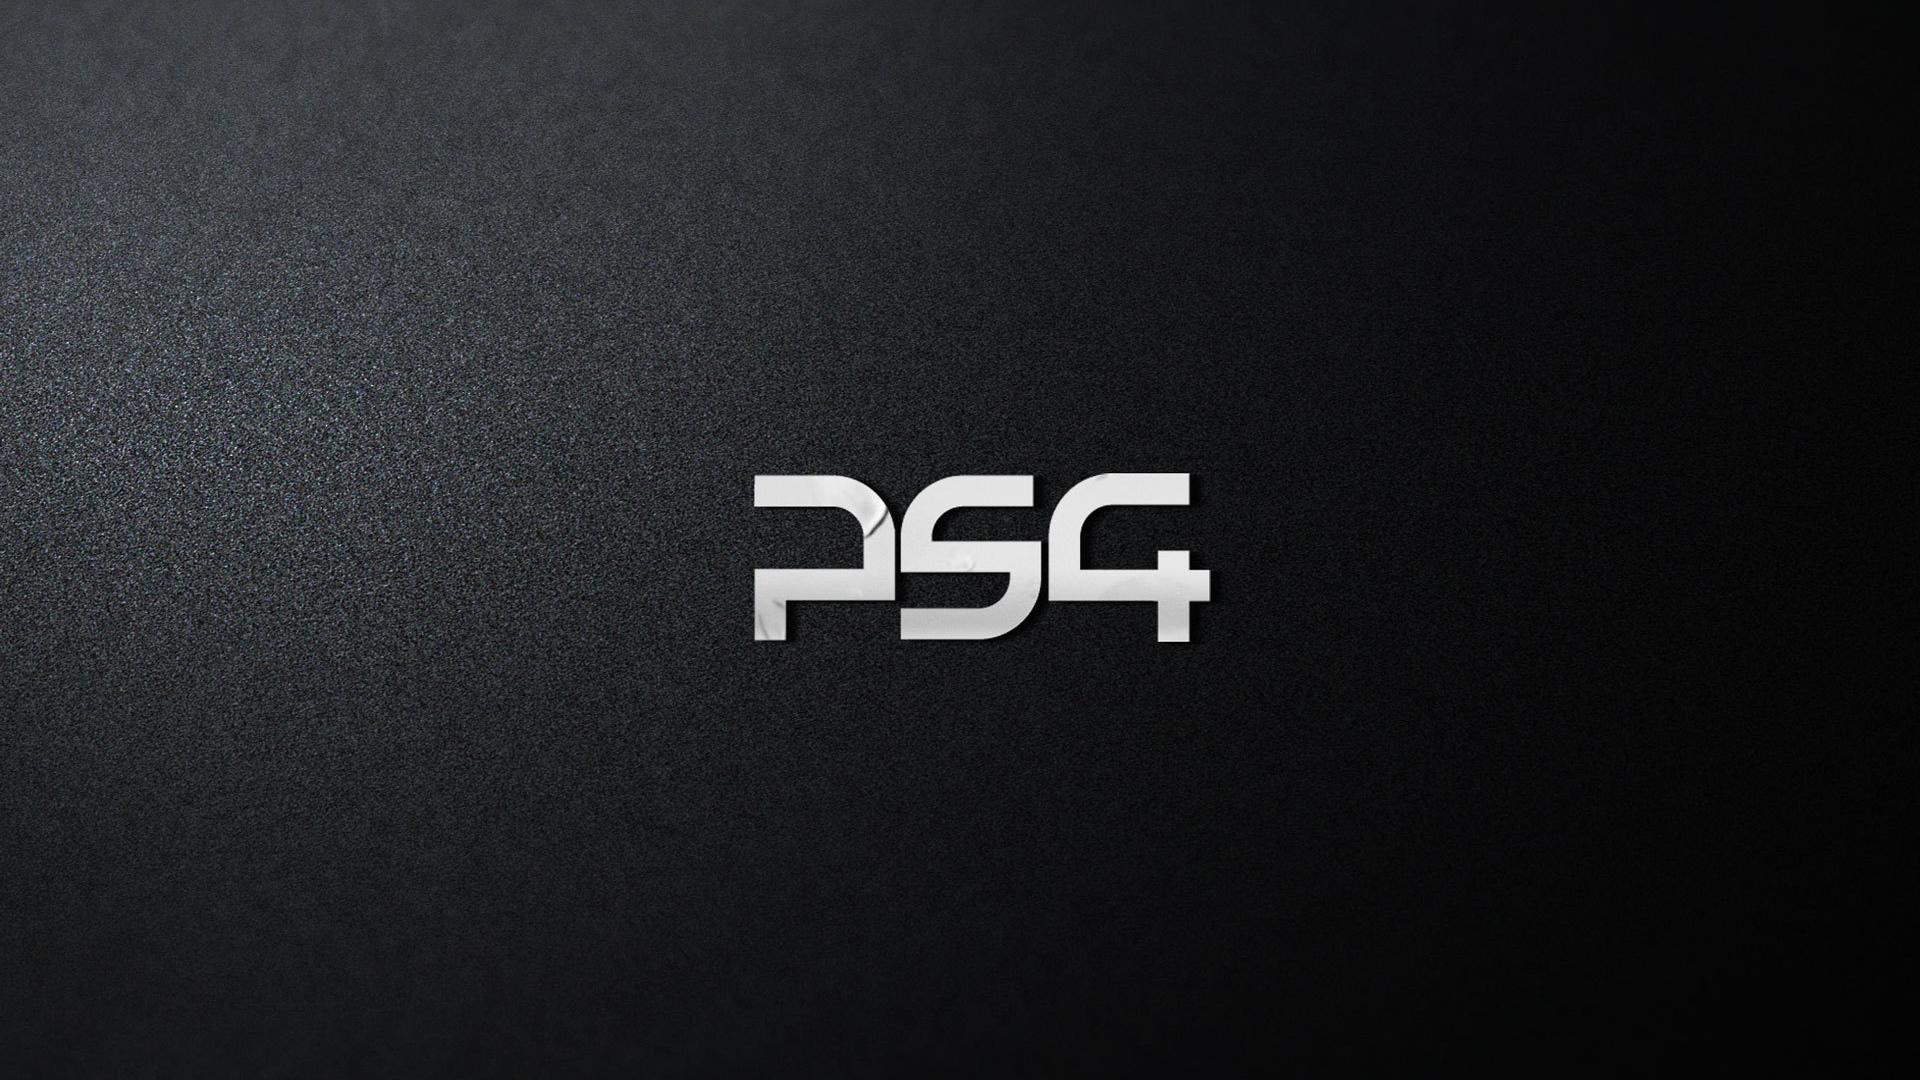 PS4 Minimal logo Desktop wallpaper 1920x1080